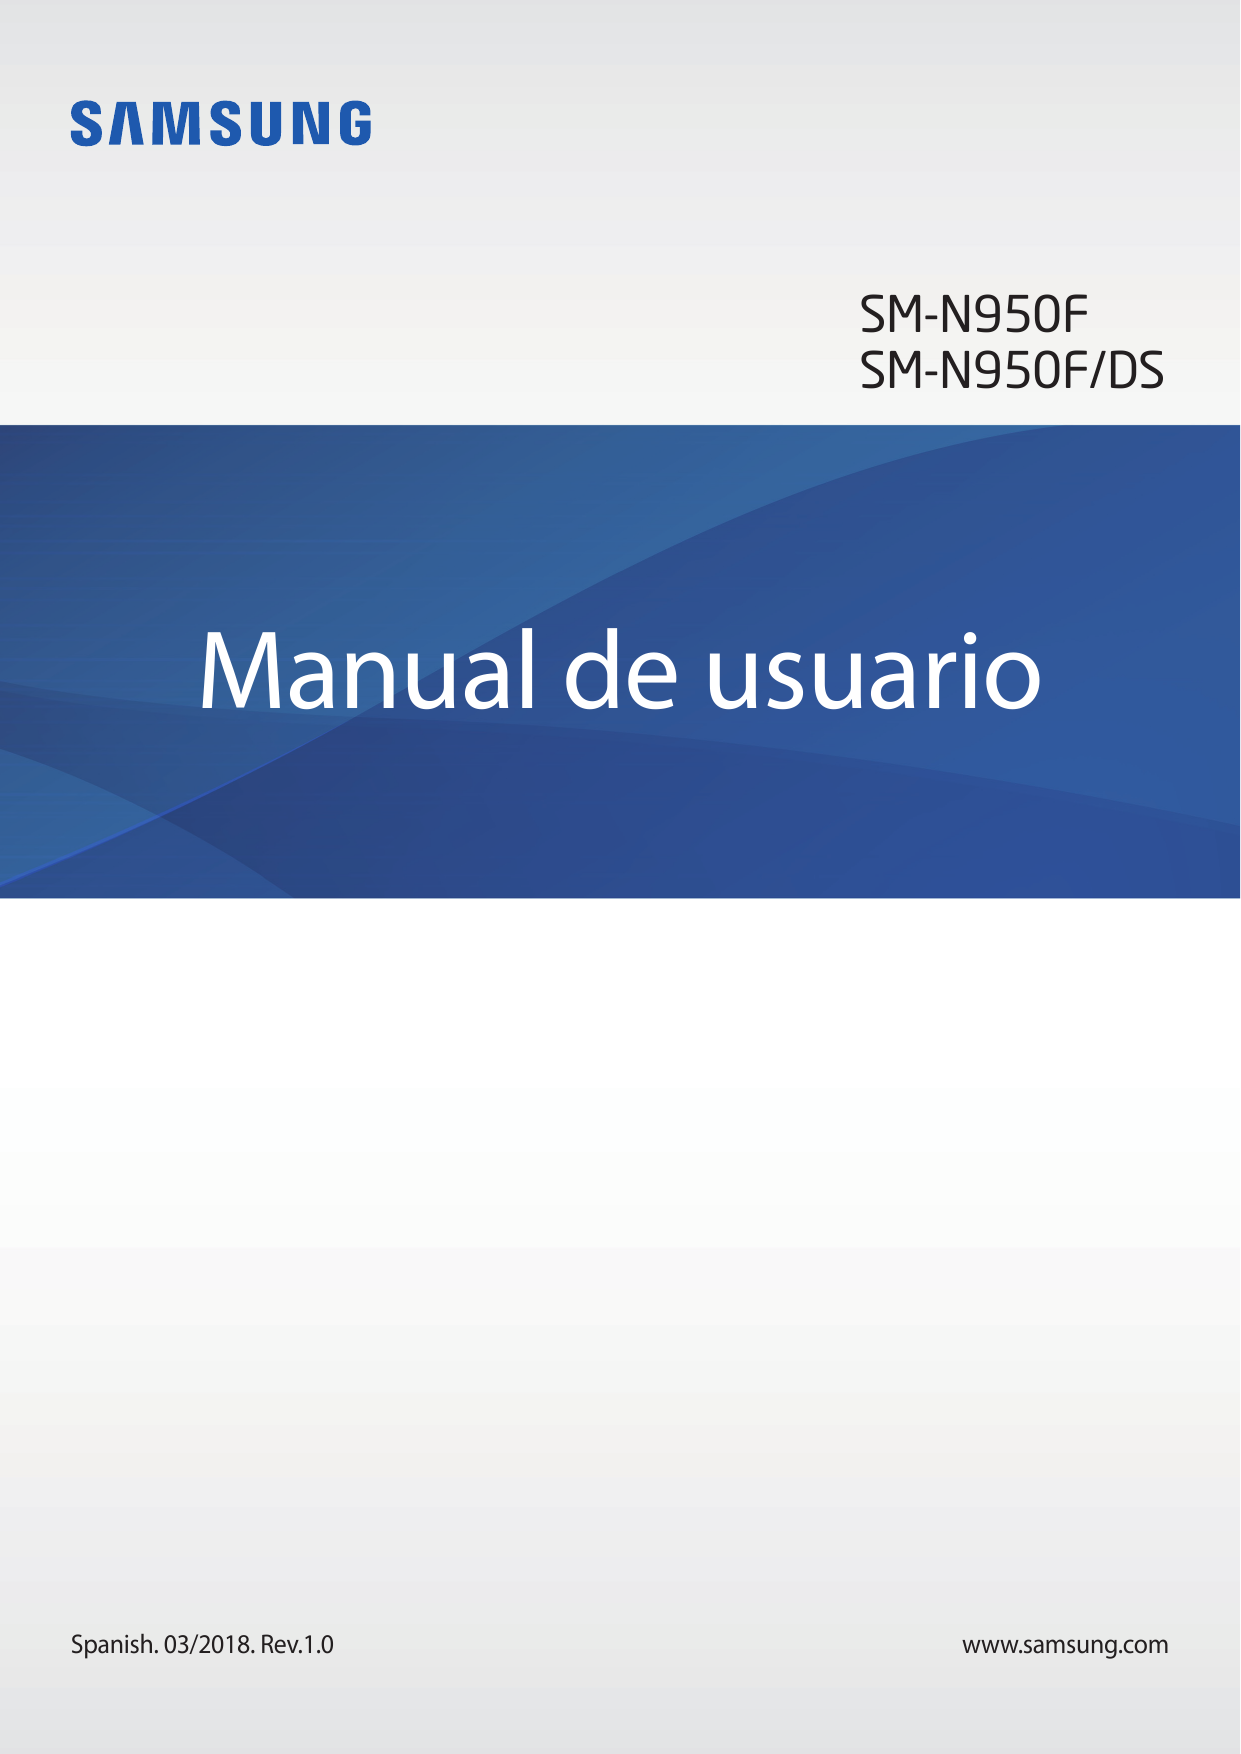 SM-N950FSM-N950F/DSManual de usuarioSpanish. 03/2018. Rev.1.0www.samsung.com